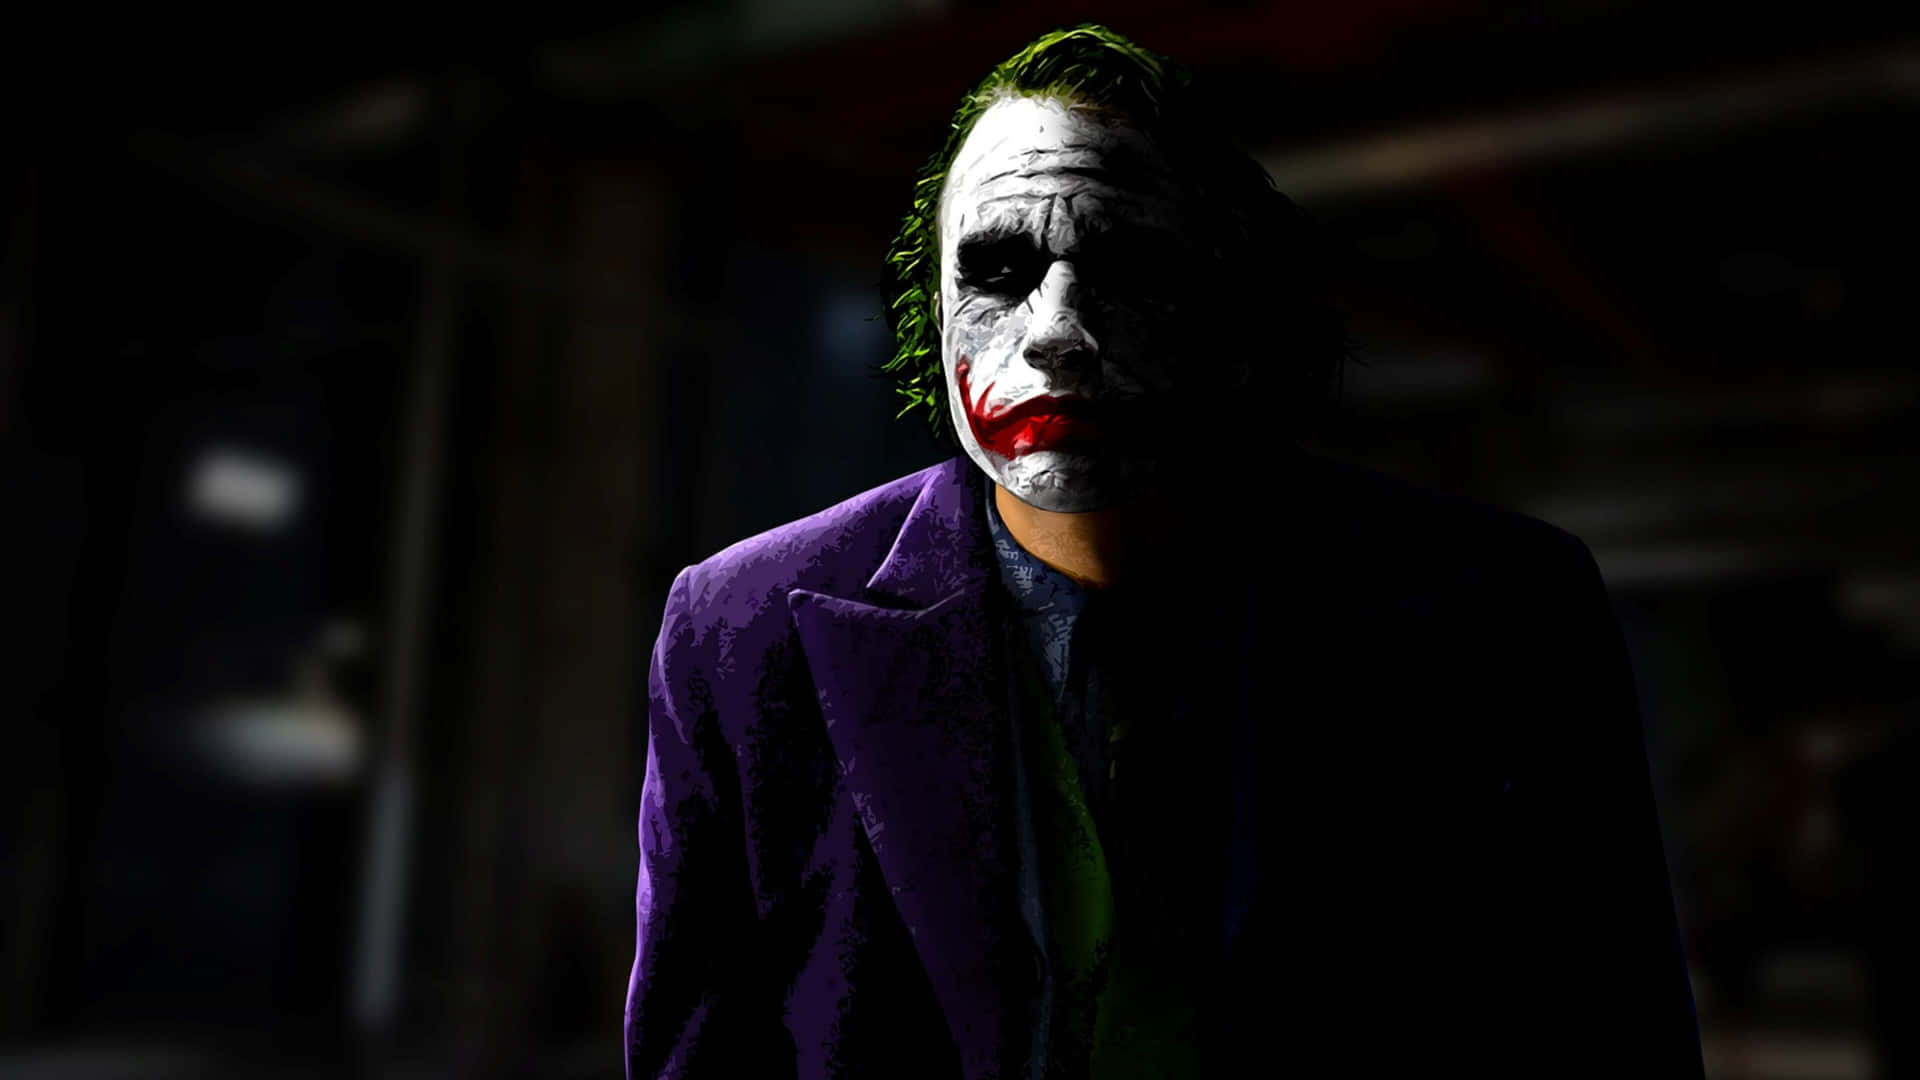 The Dark Knight Joker in 4K Ultra HD Wallpaper